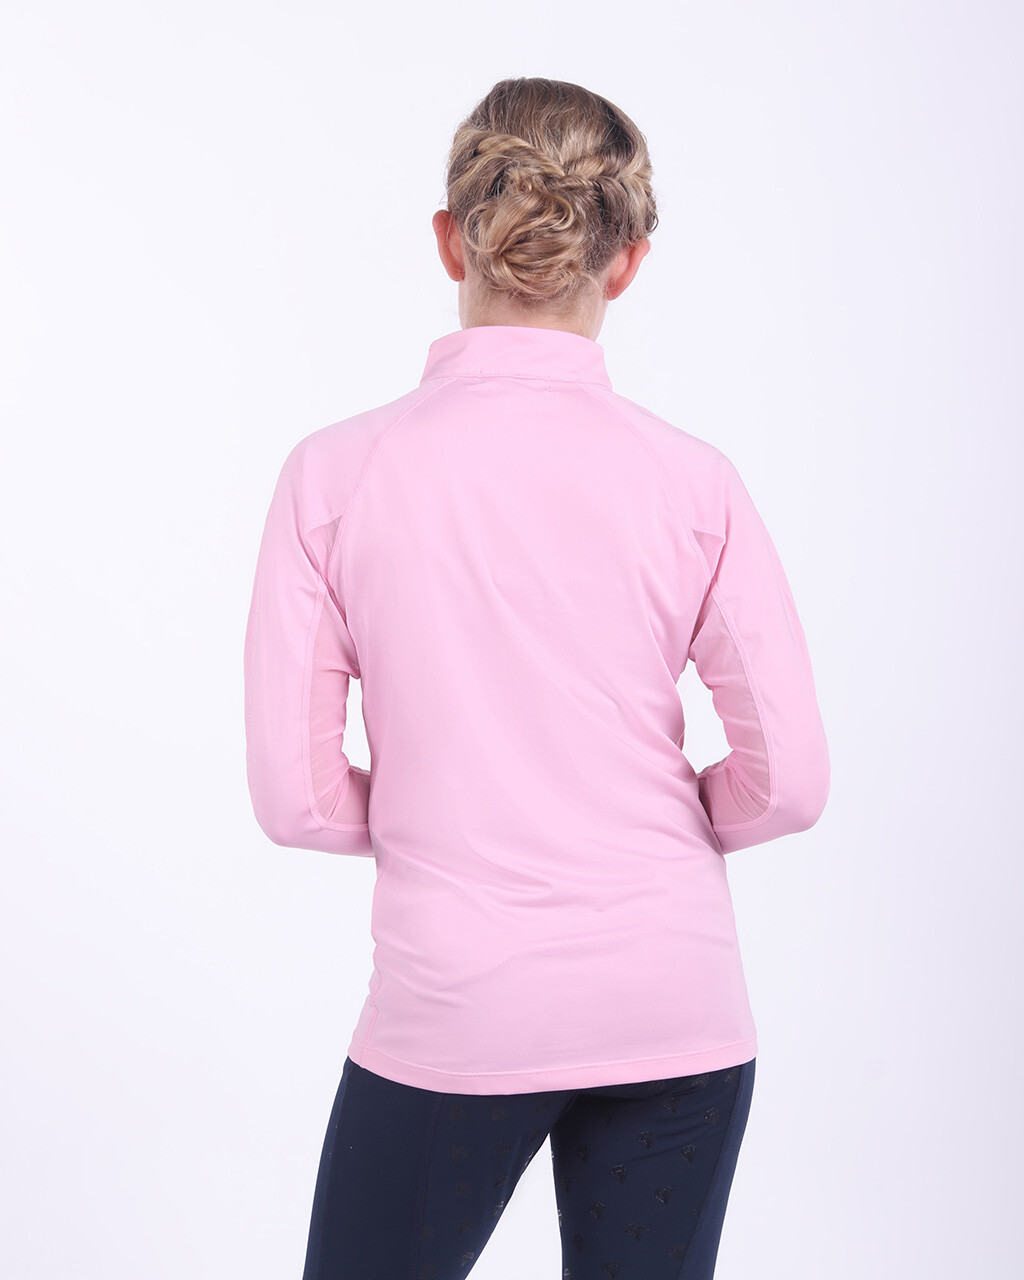 Camiseta deportiva YVET Junior, rosa empolvado